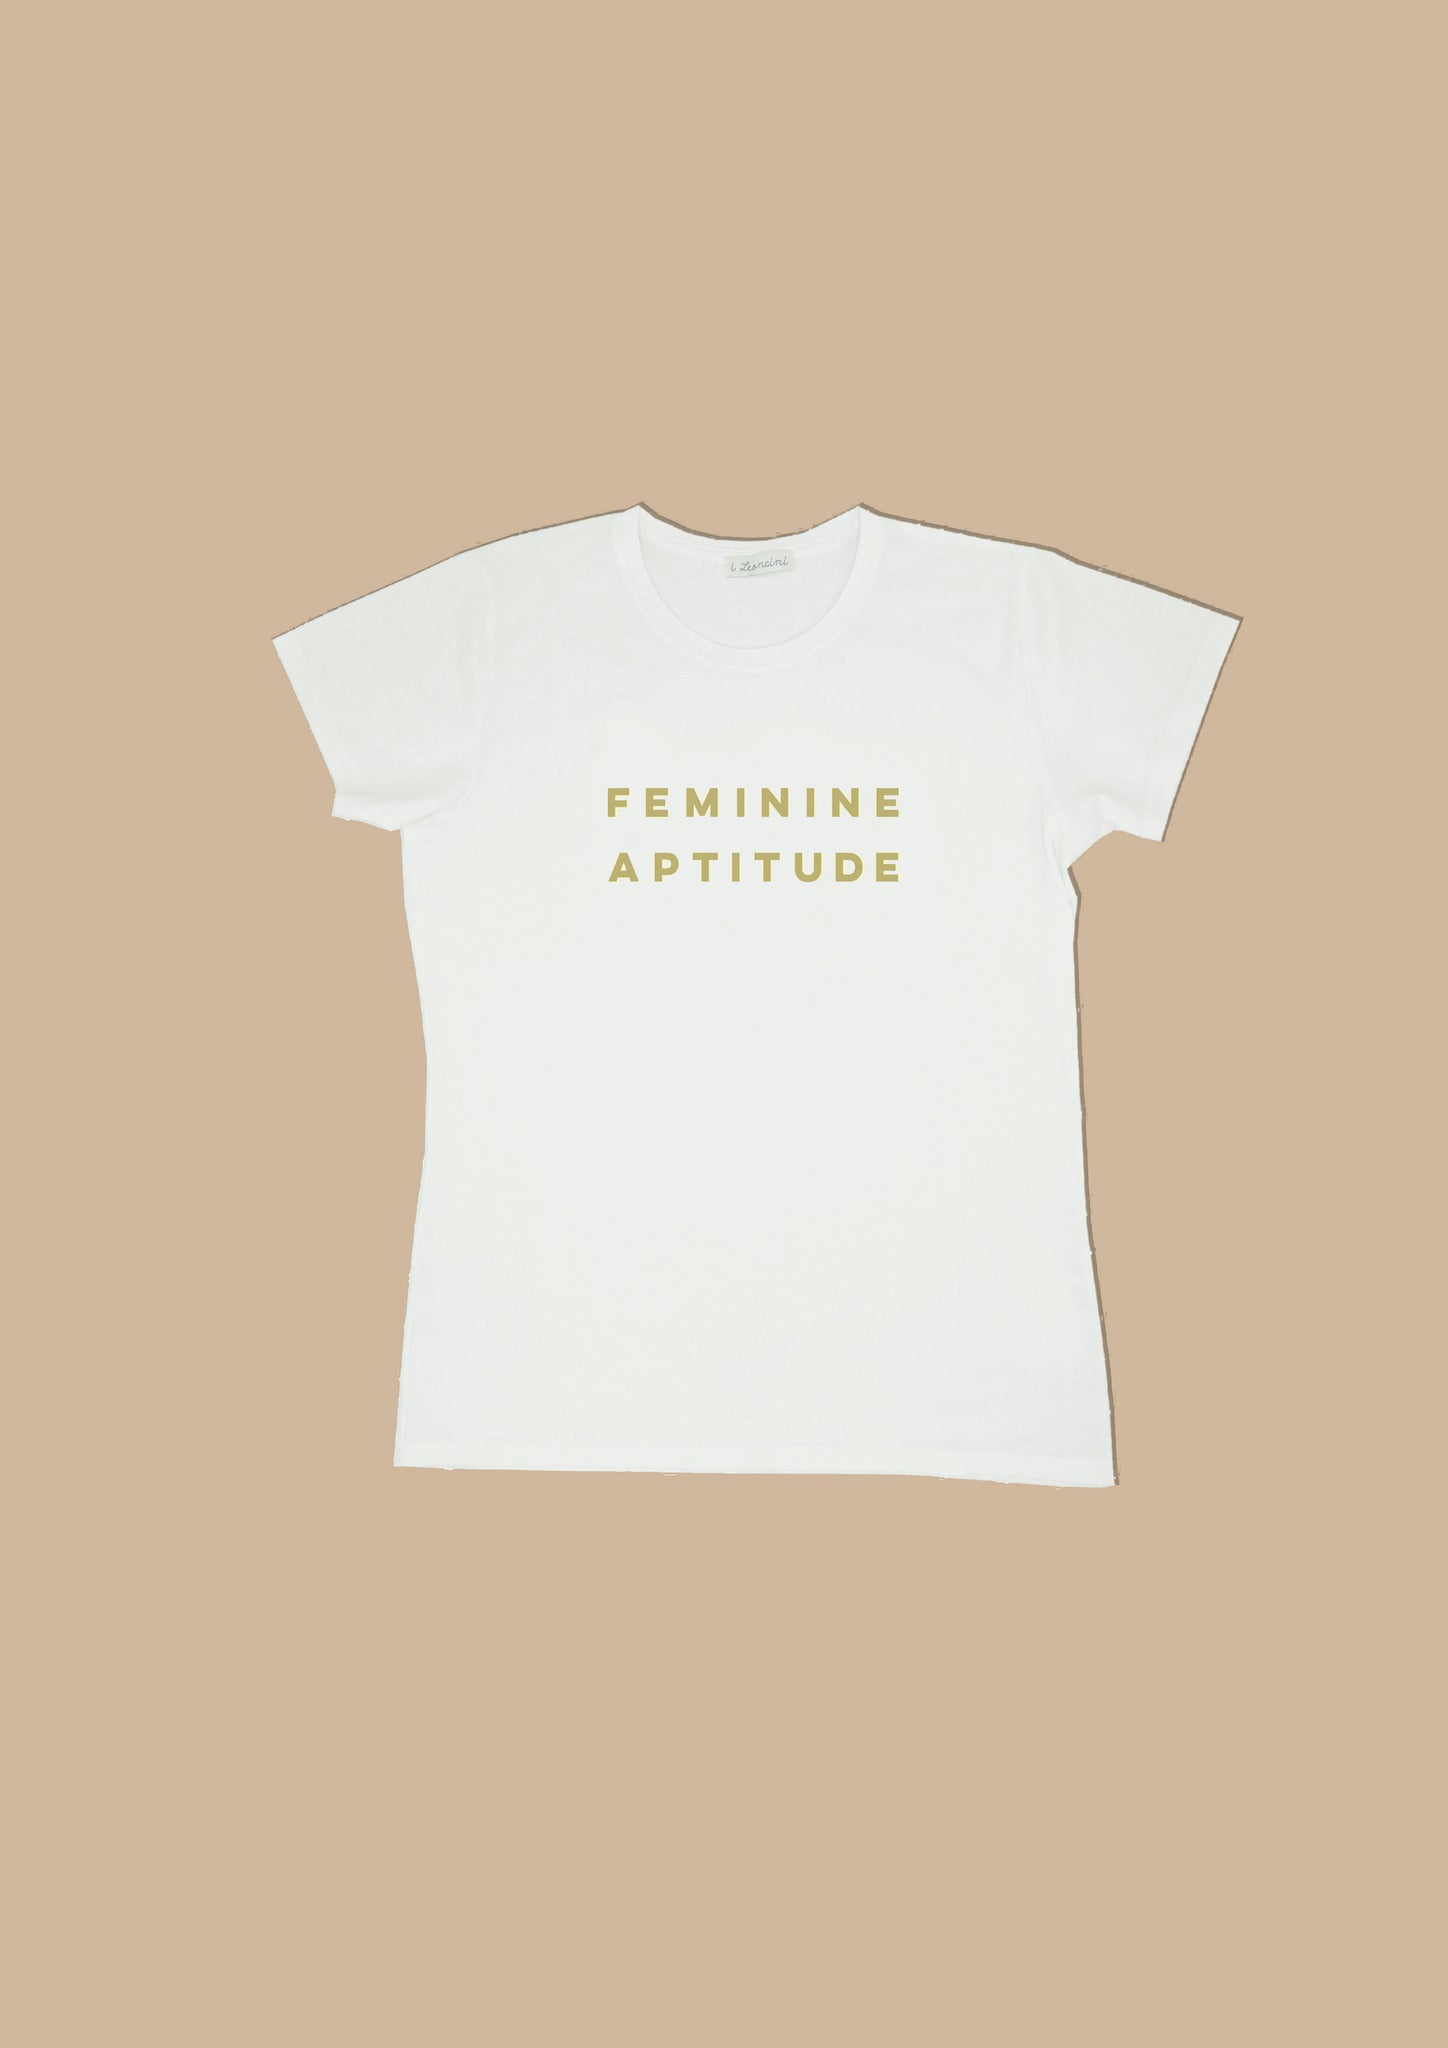 T-shirt FEMININE Bianco stampa oro-Feminine aptitude-I Leoncini Shop